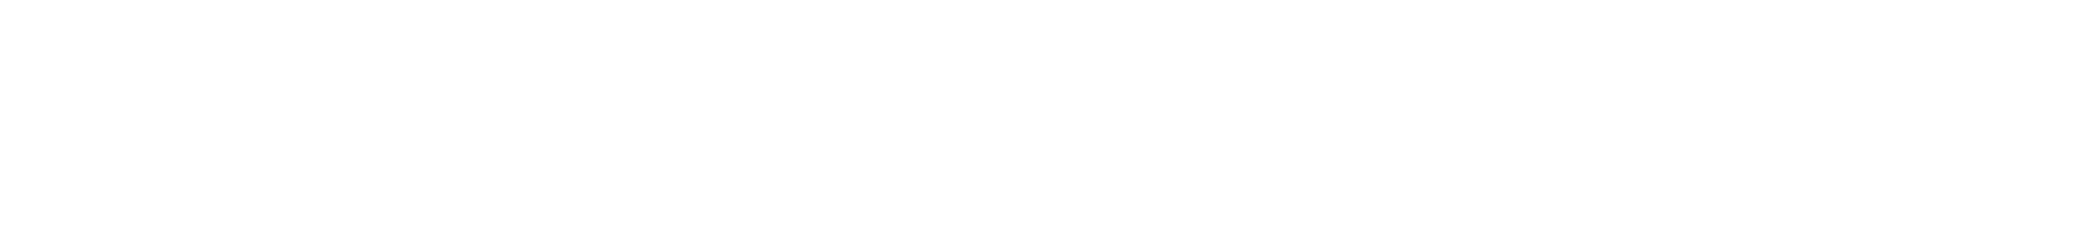 United Media Solution, China Digital Marketing Agency